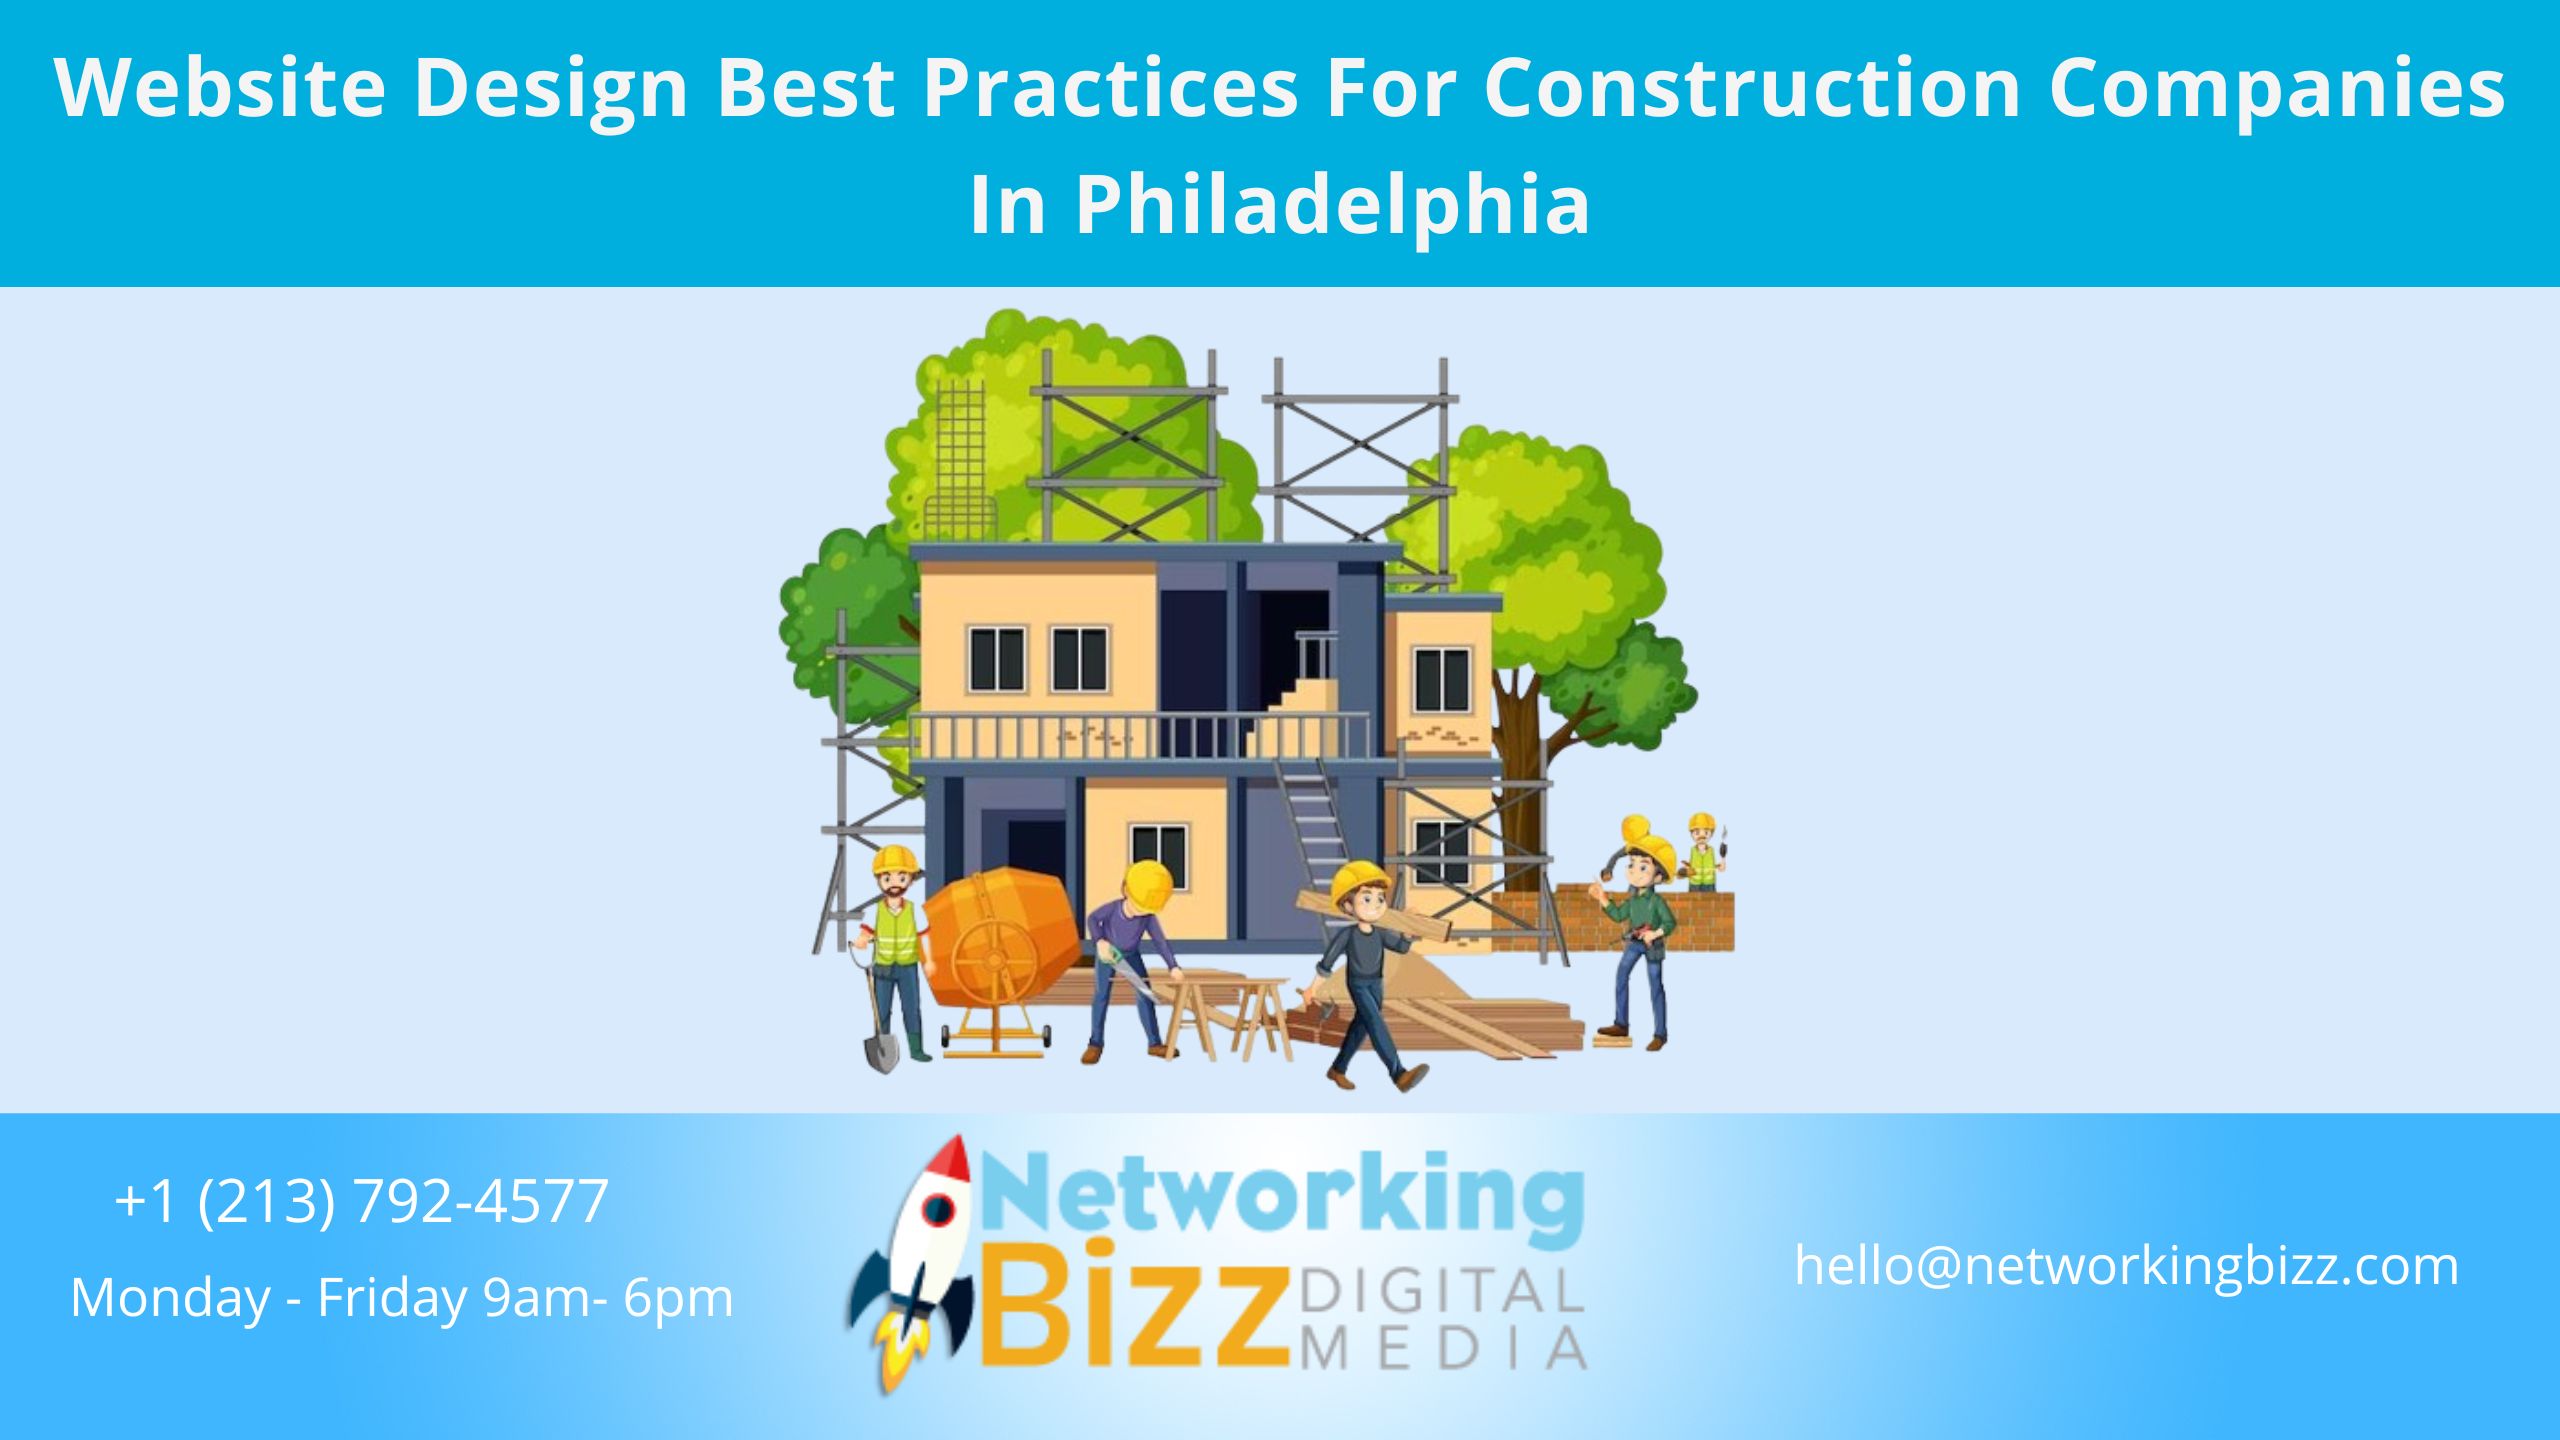 Website Design Best Practices For Construction Companies In Philadelphia